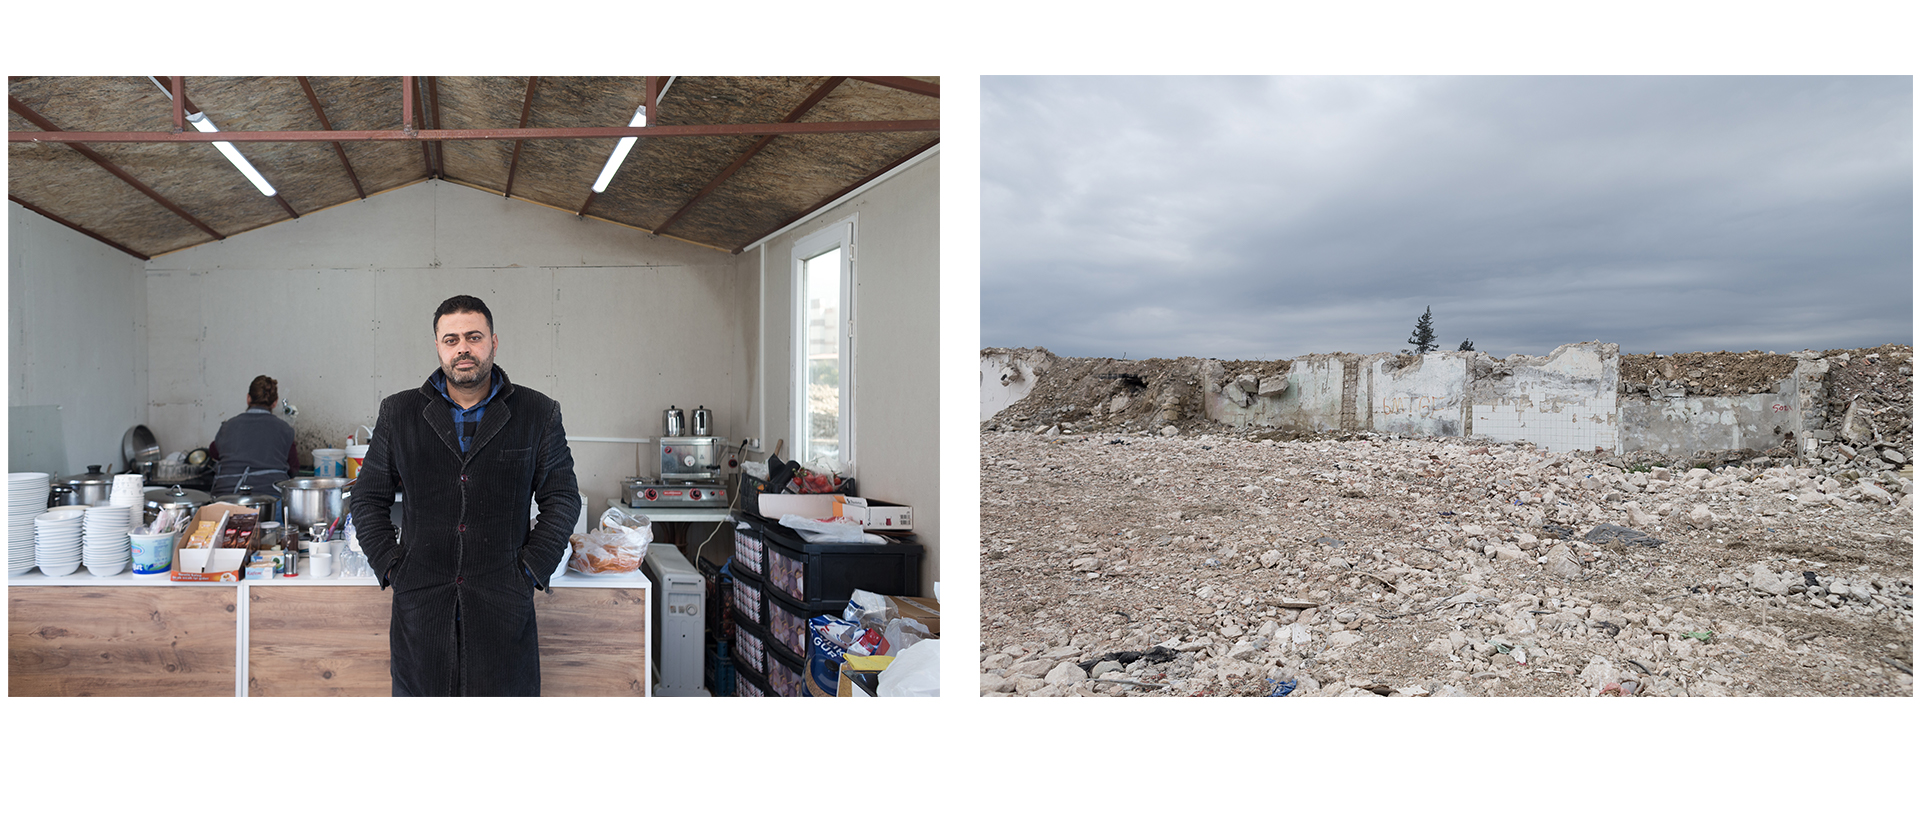 On the left, Sedat Paşa Ögretmen stands inside his soup kitchen. On the right is a pile of rubble where apartments once stood in Antakya’s Esenlik neighborhood. (Kyriakos Finas)